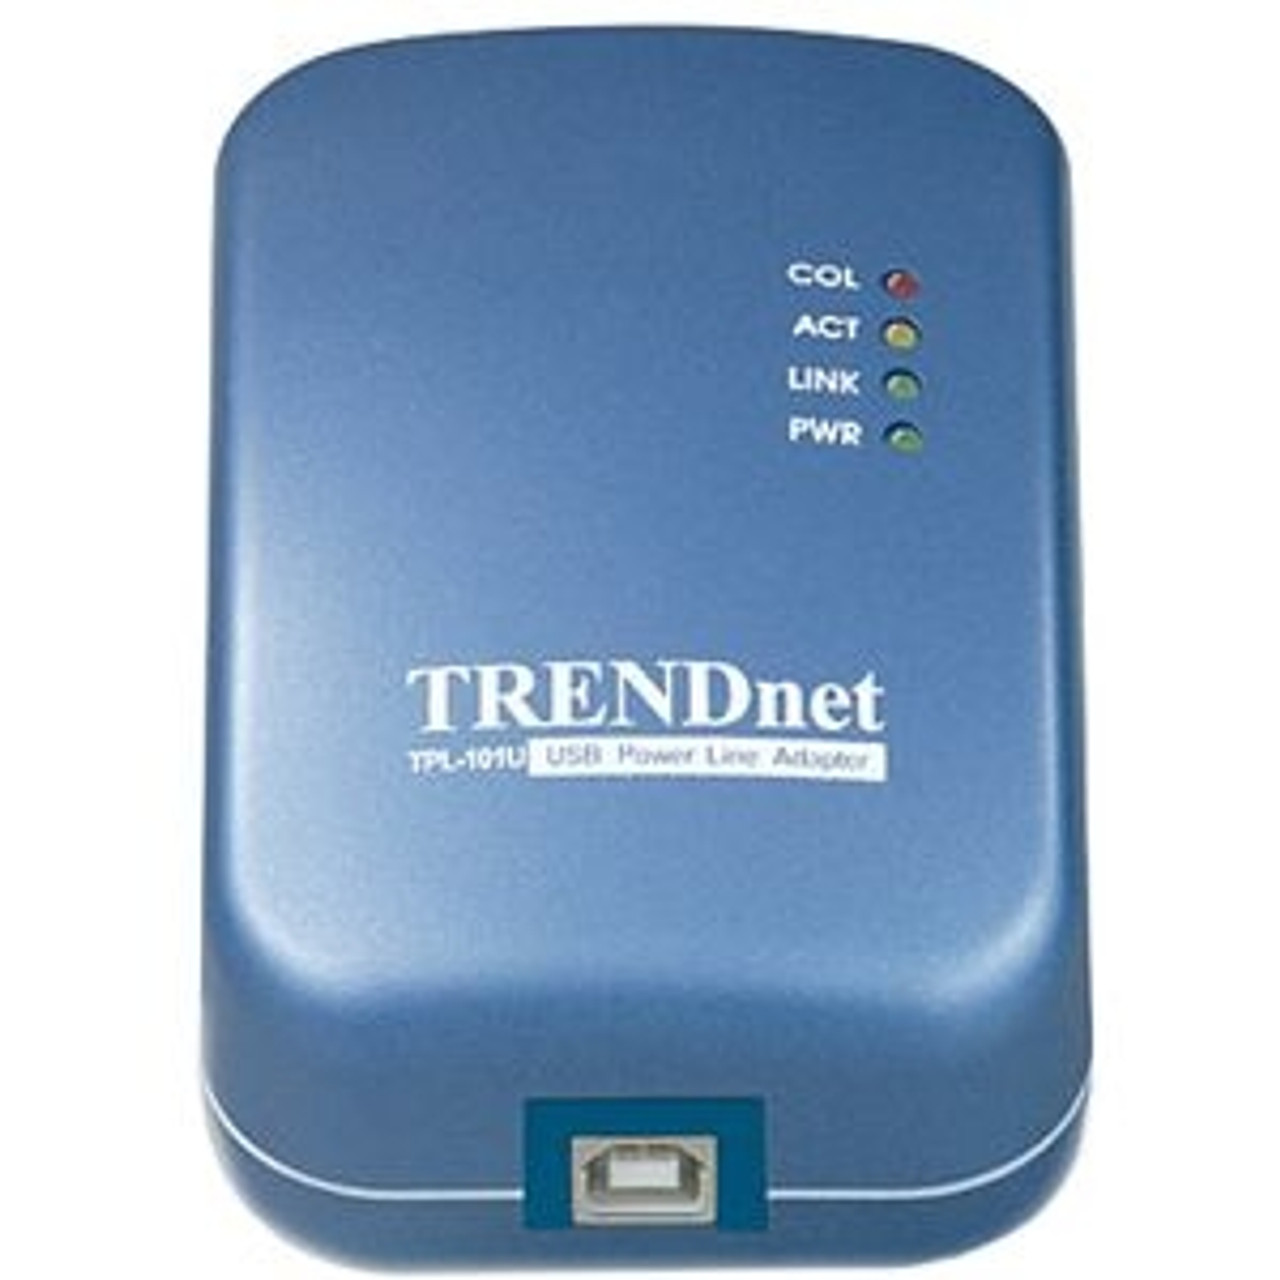 ING10617 TRENDnet TPL-101U PowerLine Network Adapter